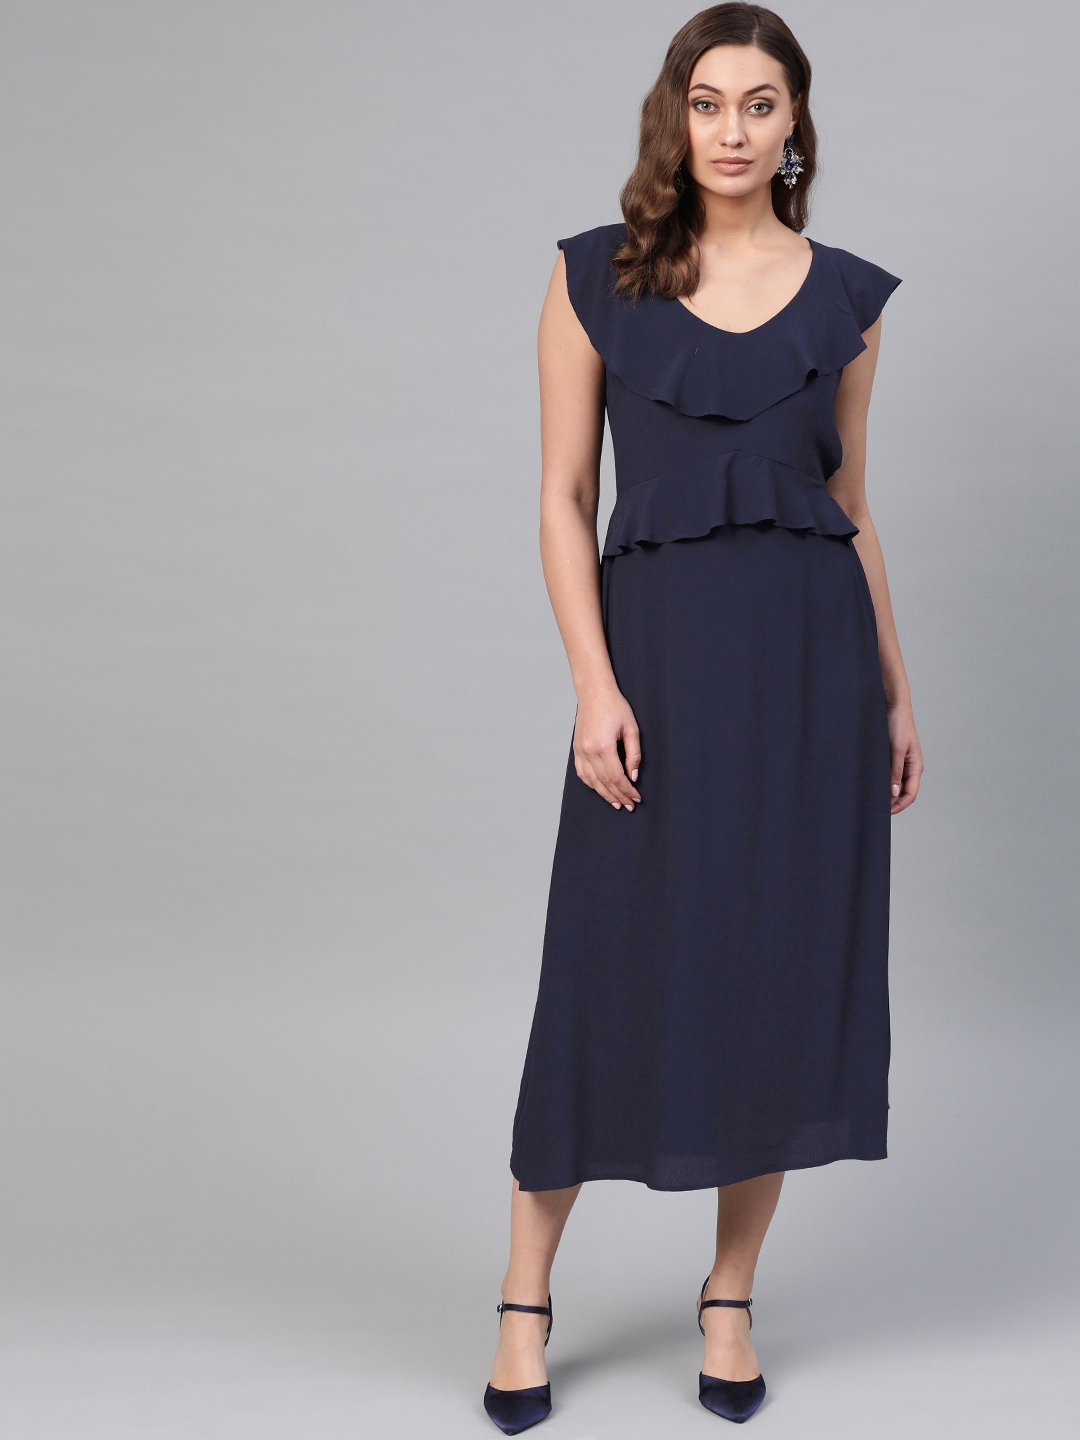 Buy DOROTHY PERKINS Women Navy Blue Solid A Line Dress - Dresses for ...